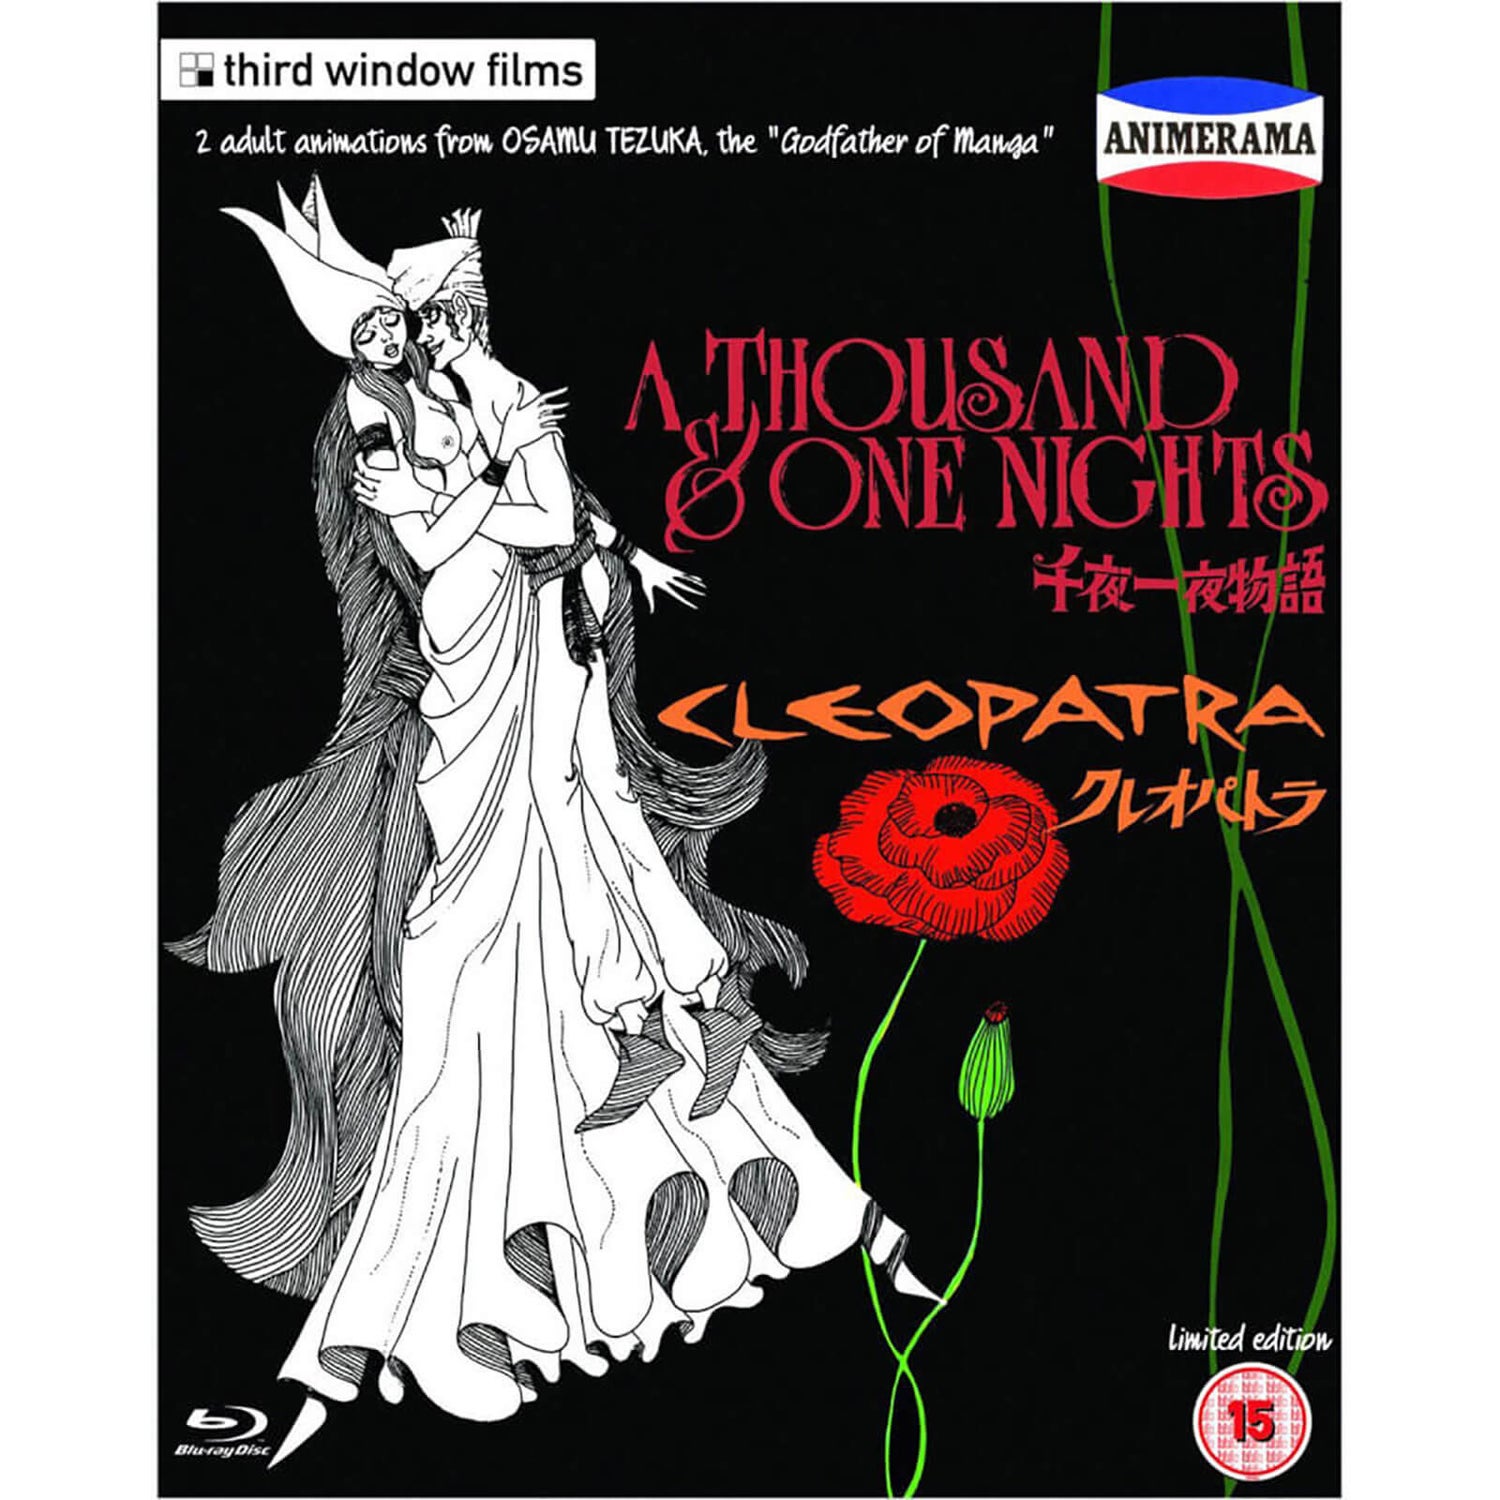 Animerama: 1001 Nights / Cleopatra (Limited Edition)